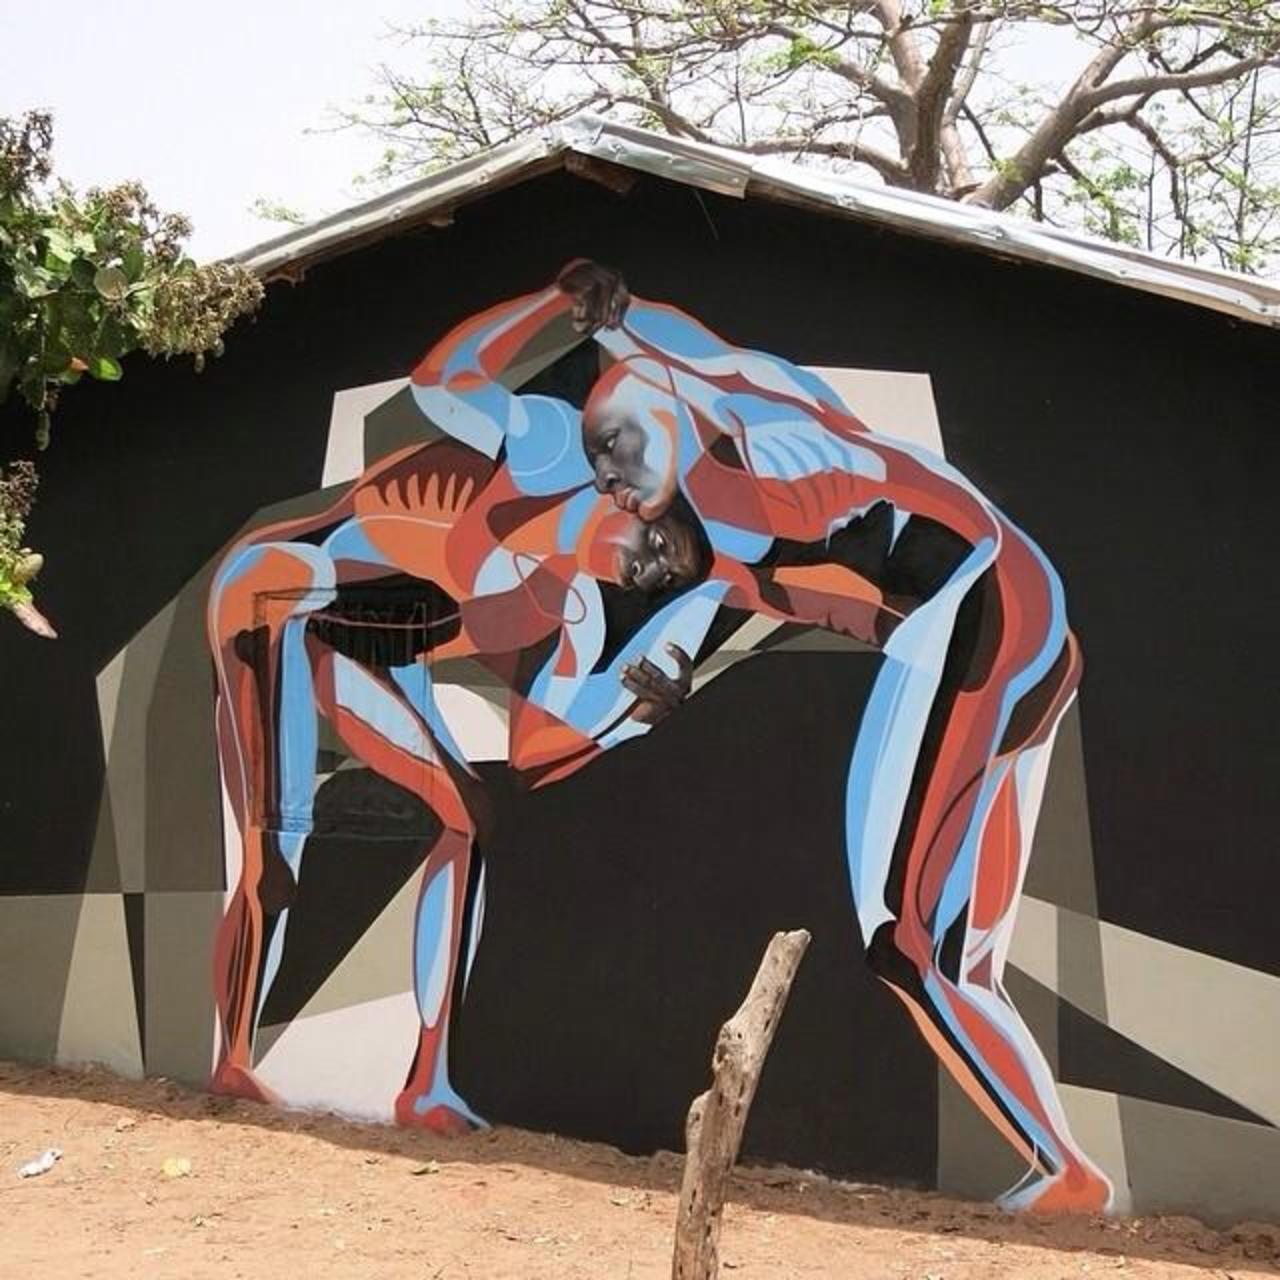 Artist 'Best Ever' new Street Art for the wide open walls in Galoya, The Gambia #art #graffiti #mural #streetart https://t.co/s8wPJVr1rD